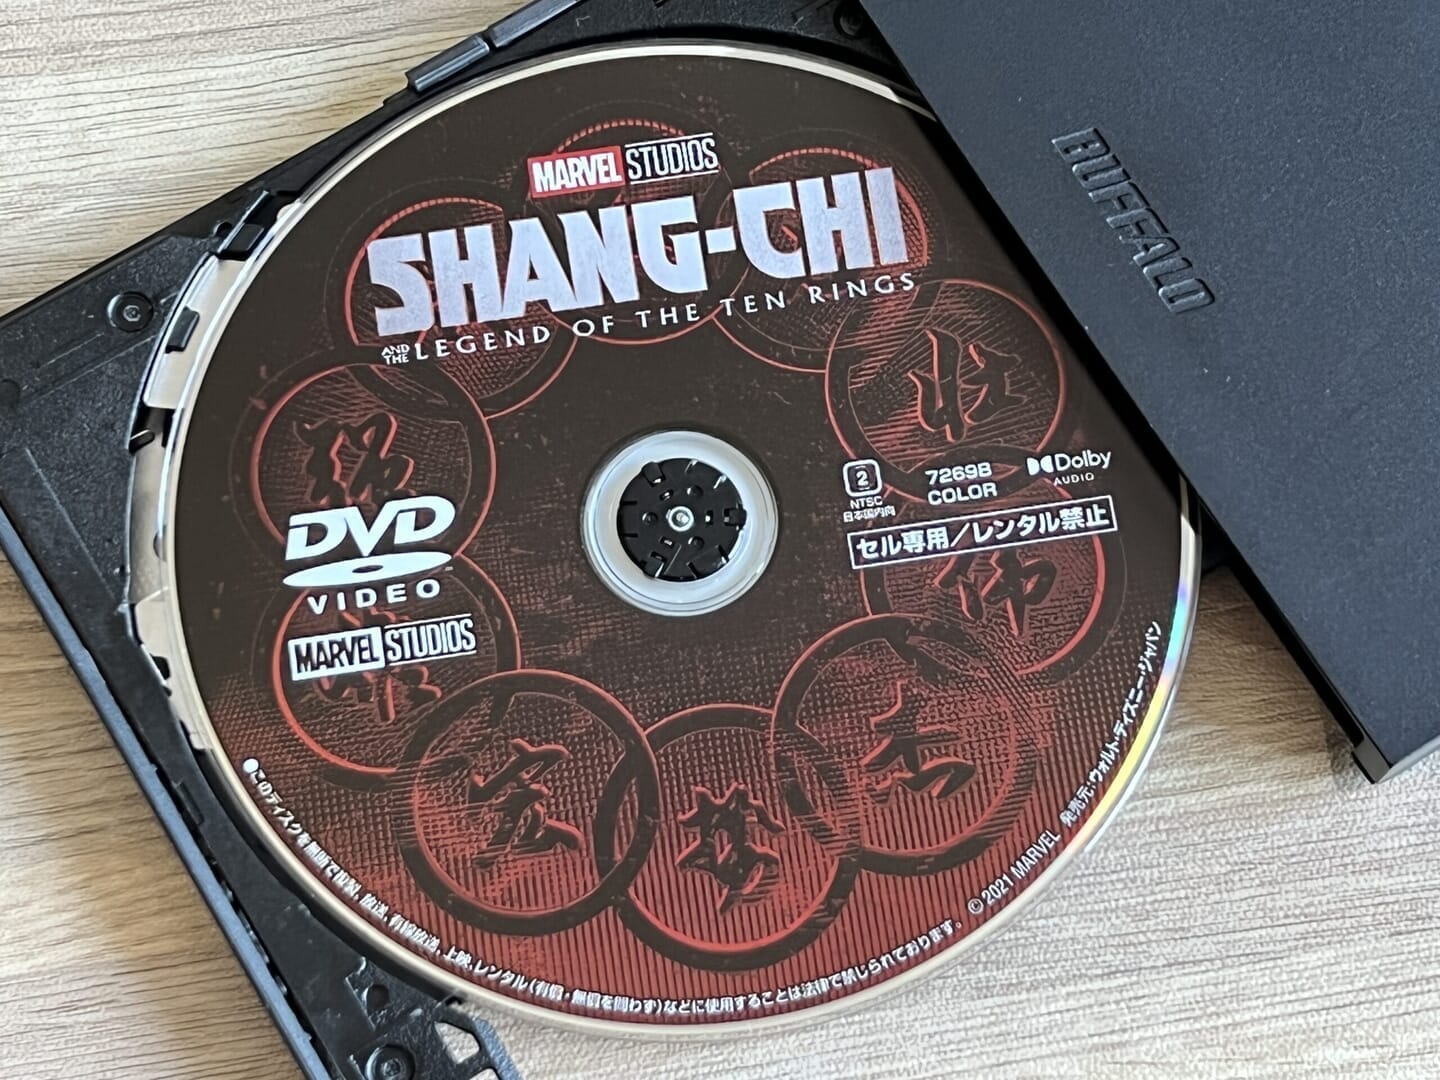 DVDリッピング性能を検証：ディズニー作品『シャン・チー/テン・リングスの伝説』をMP4形式でリッピングできました。